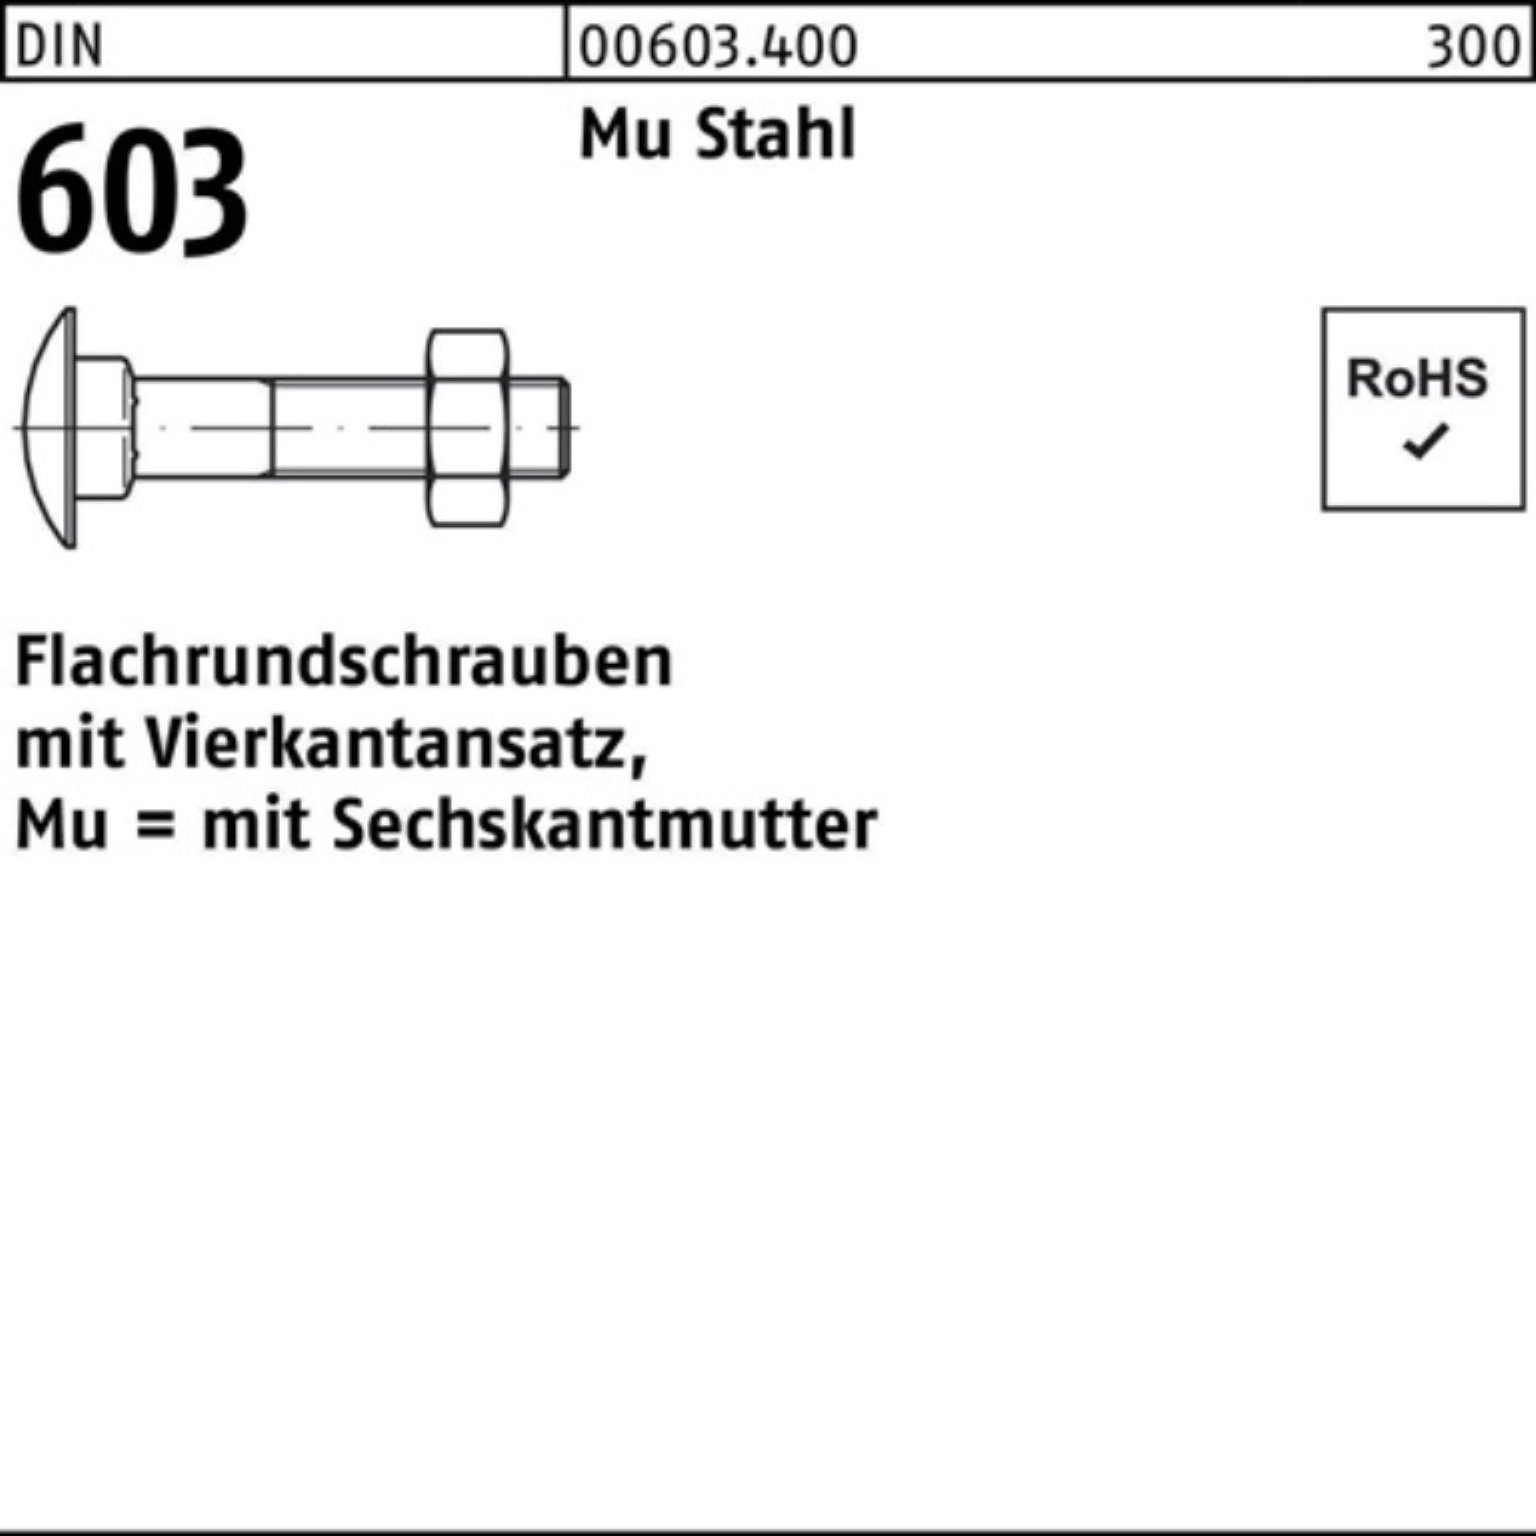 M6x55 Reyher M Vierkantansatz/6-ktmutter Flachrundschraube Pack DIN 603 Schraube 200er